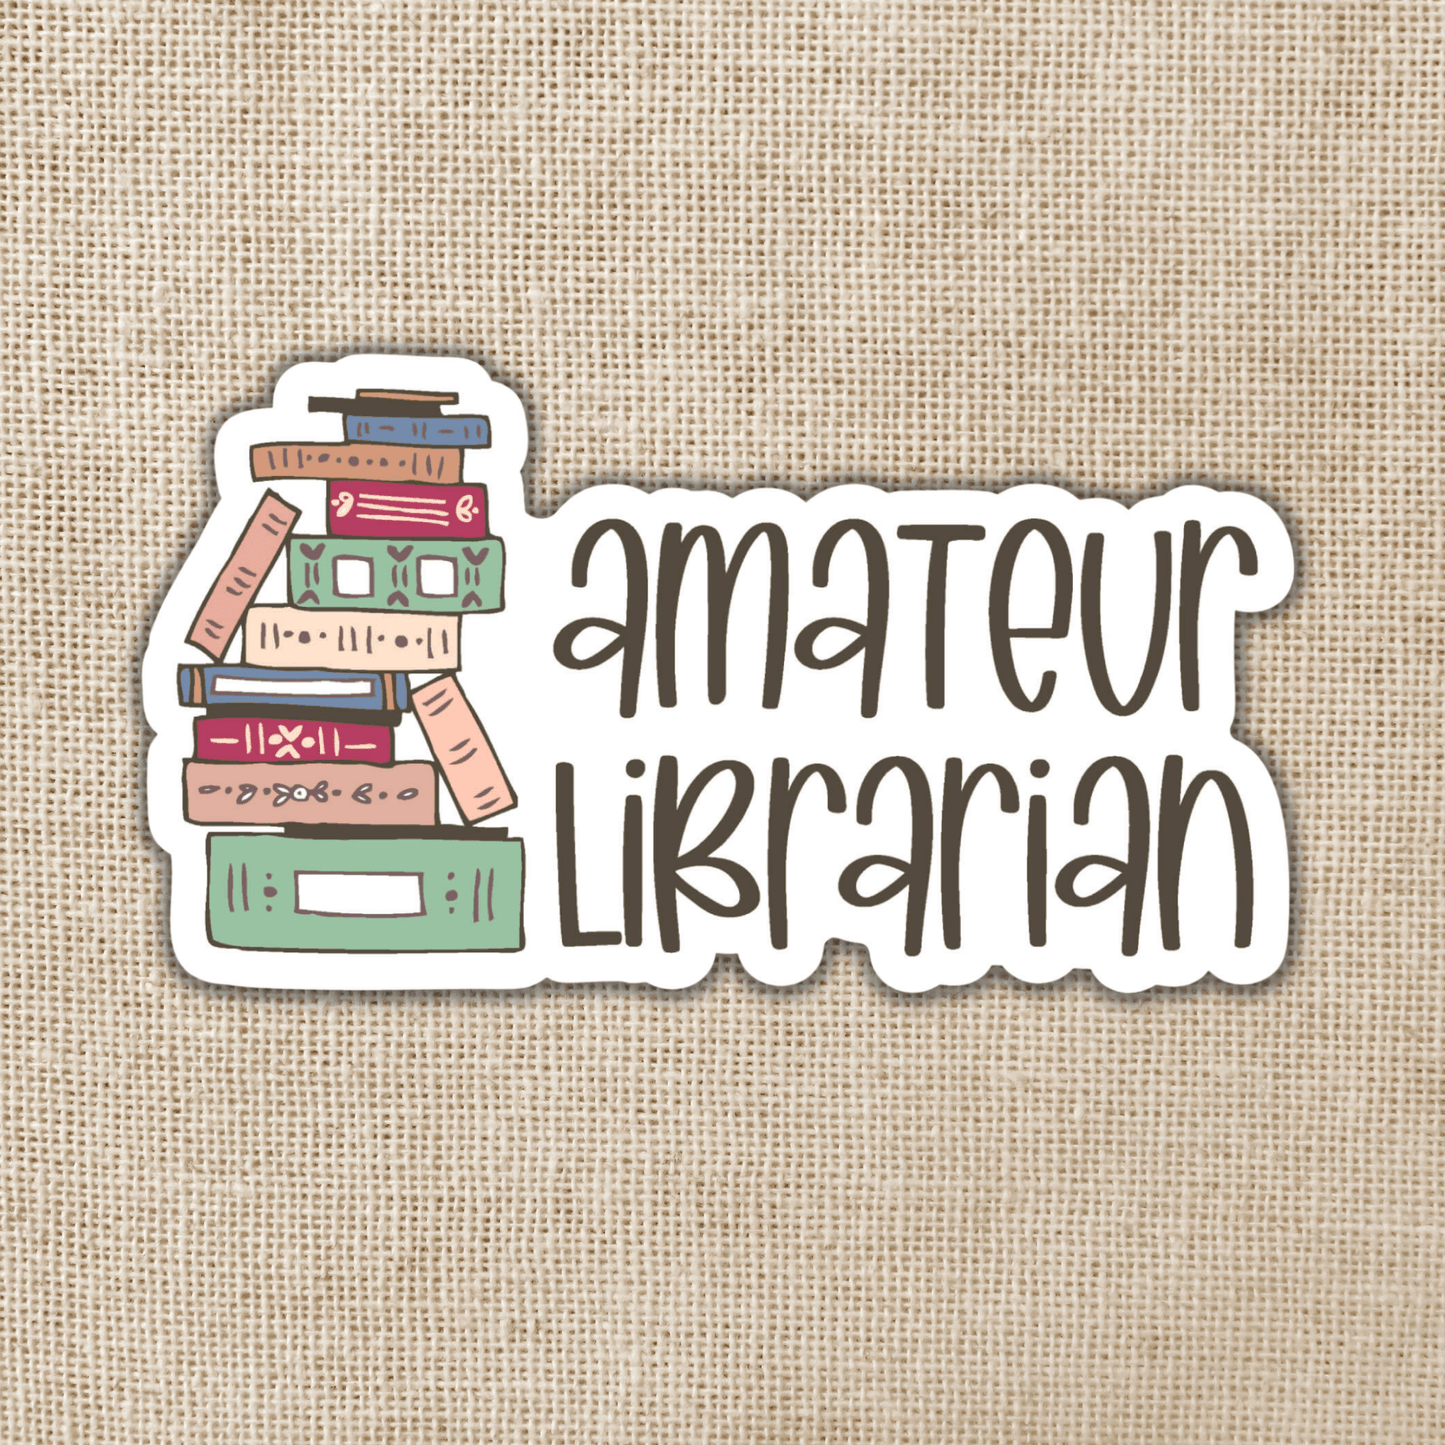 Sticker-Books-11: Amateur Librarian